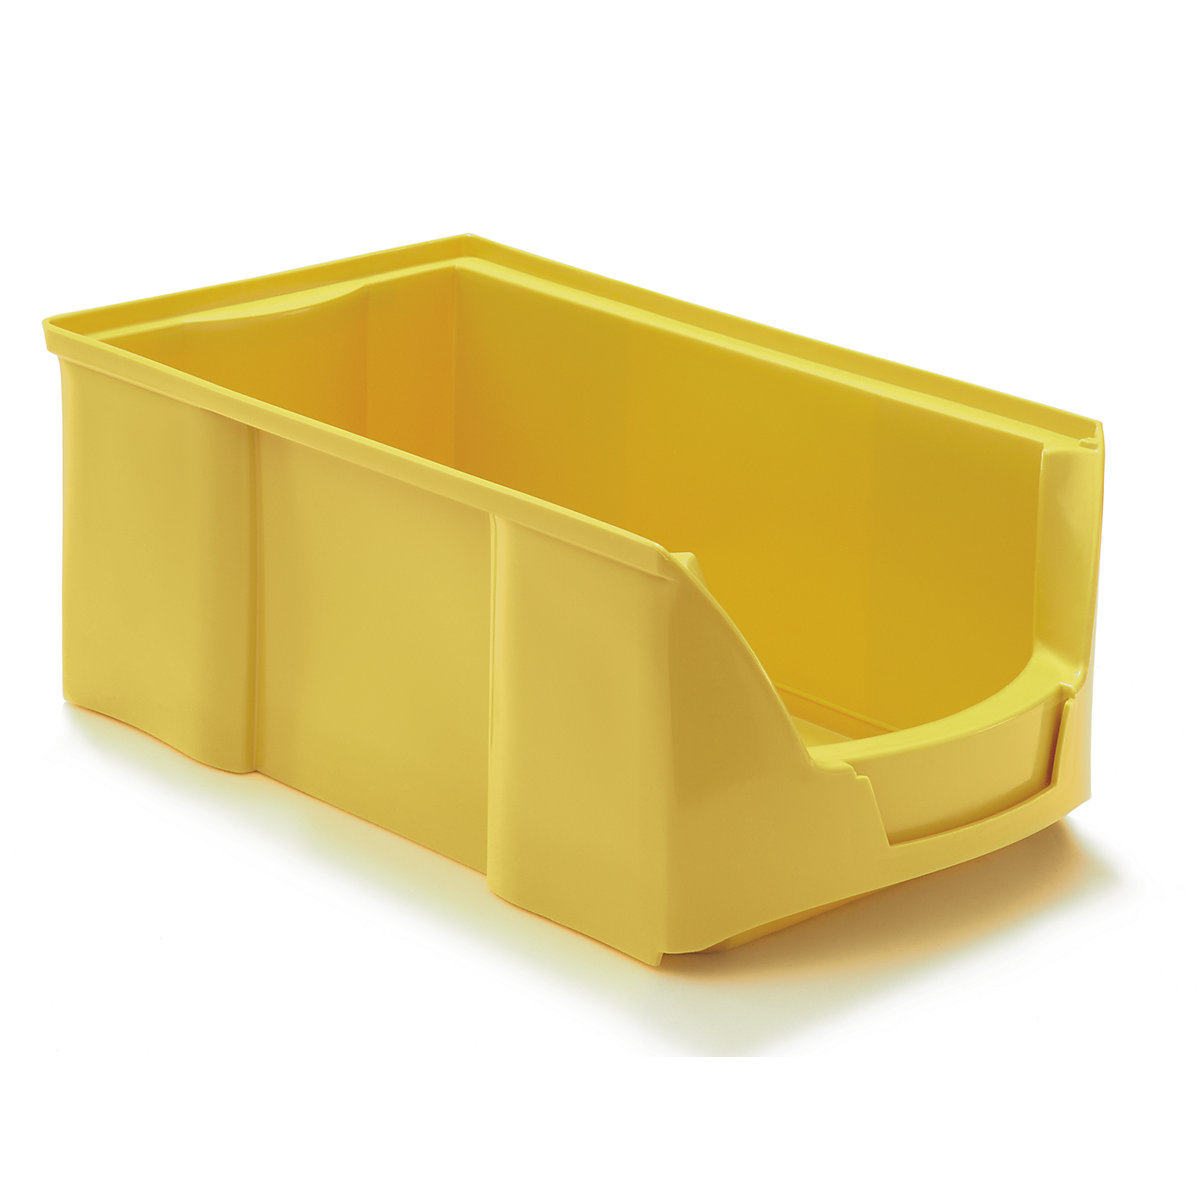 FUTURA-magazijnbak van polyethyleen, l x b x h = 360 x 208 x 147 mm, VE = 12 stuks, geel